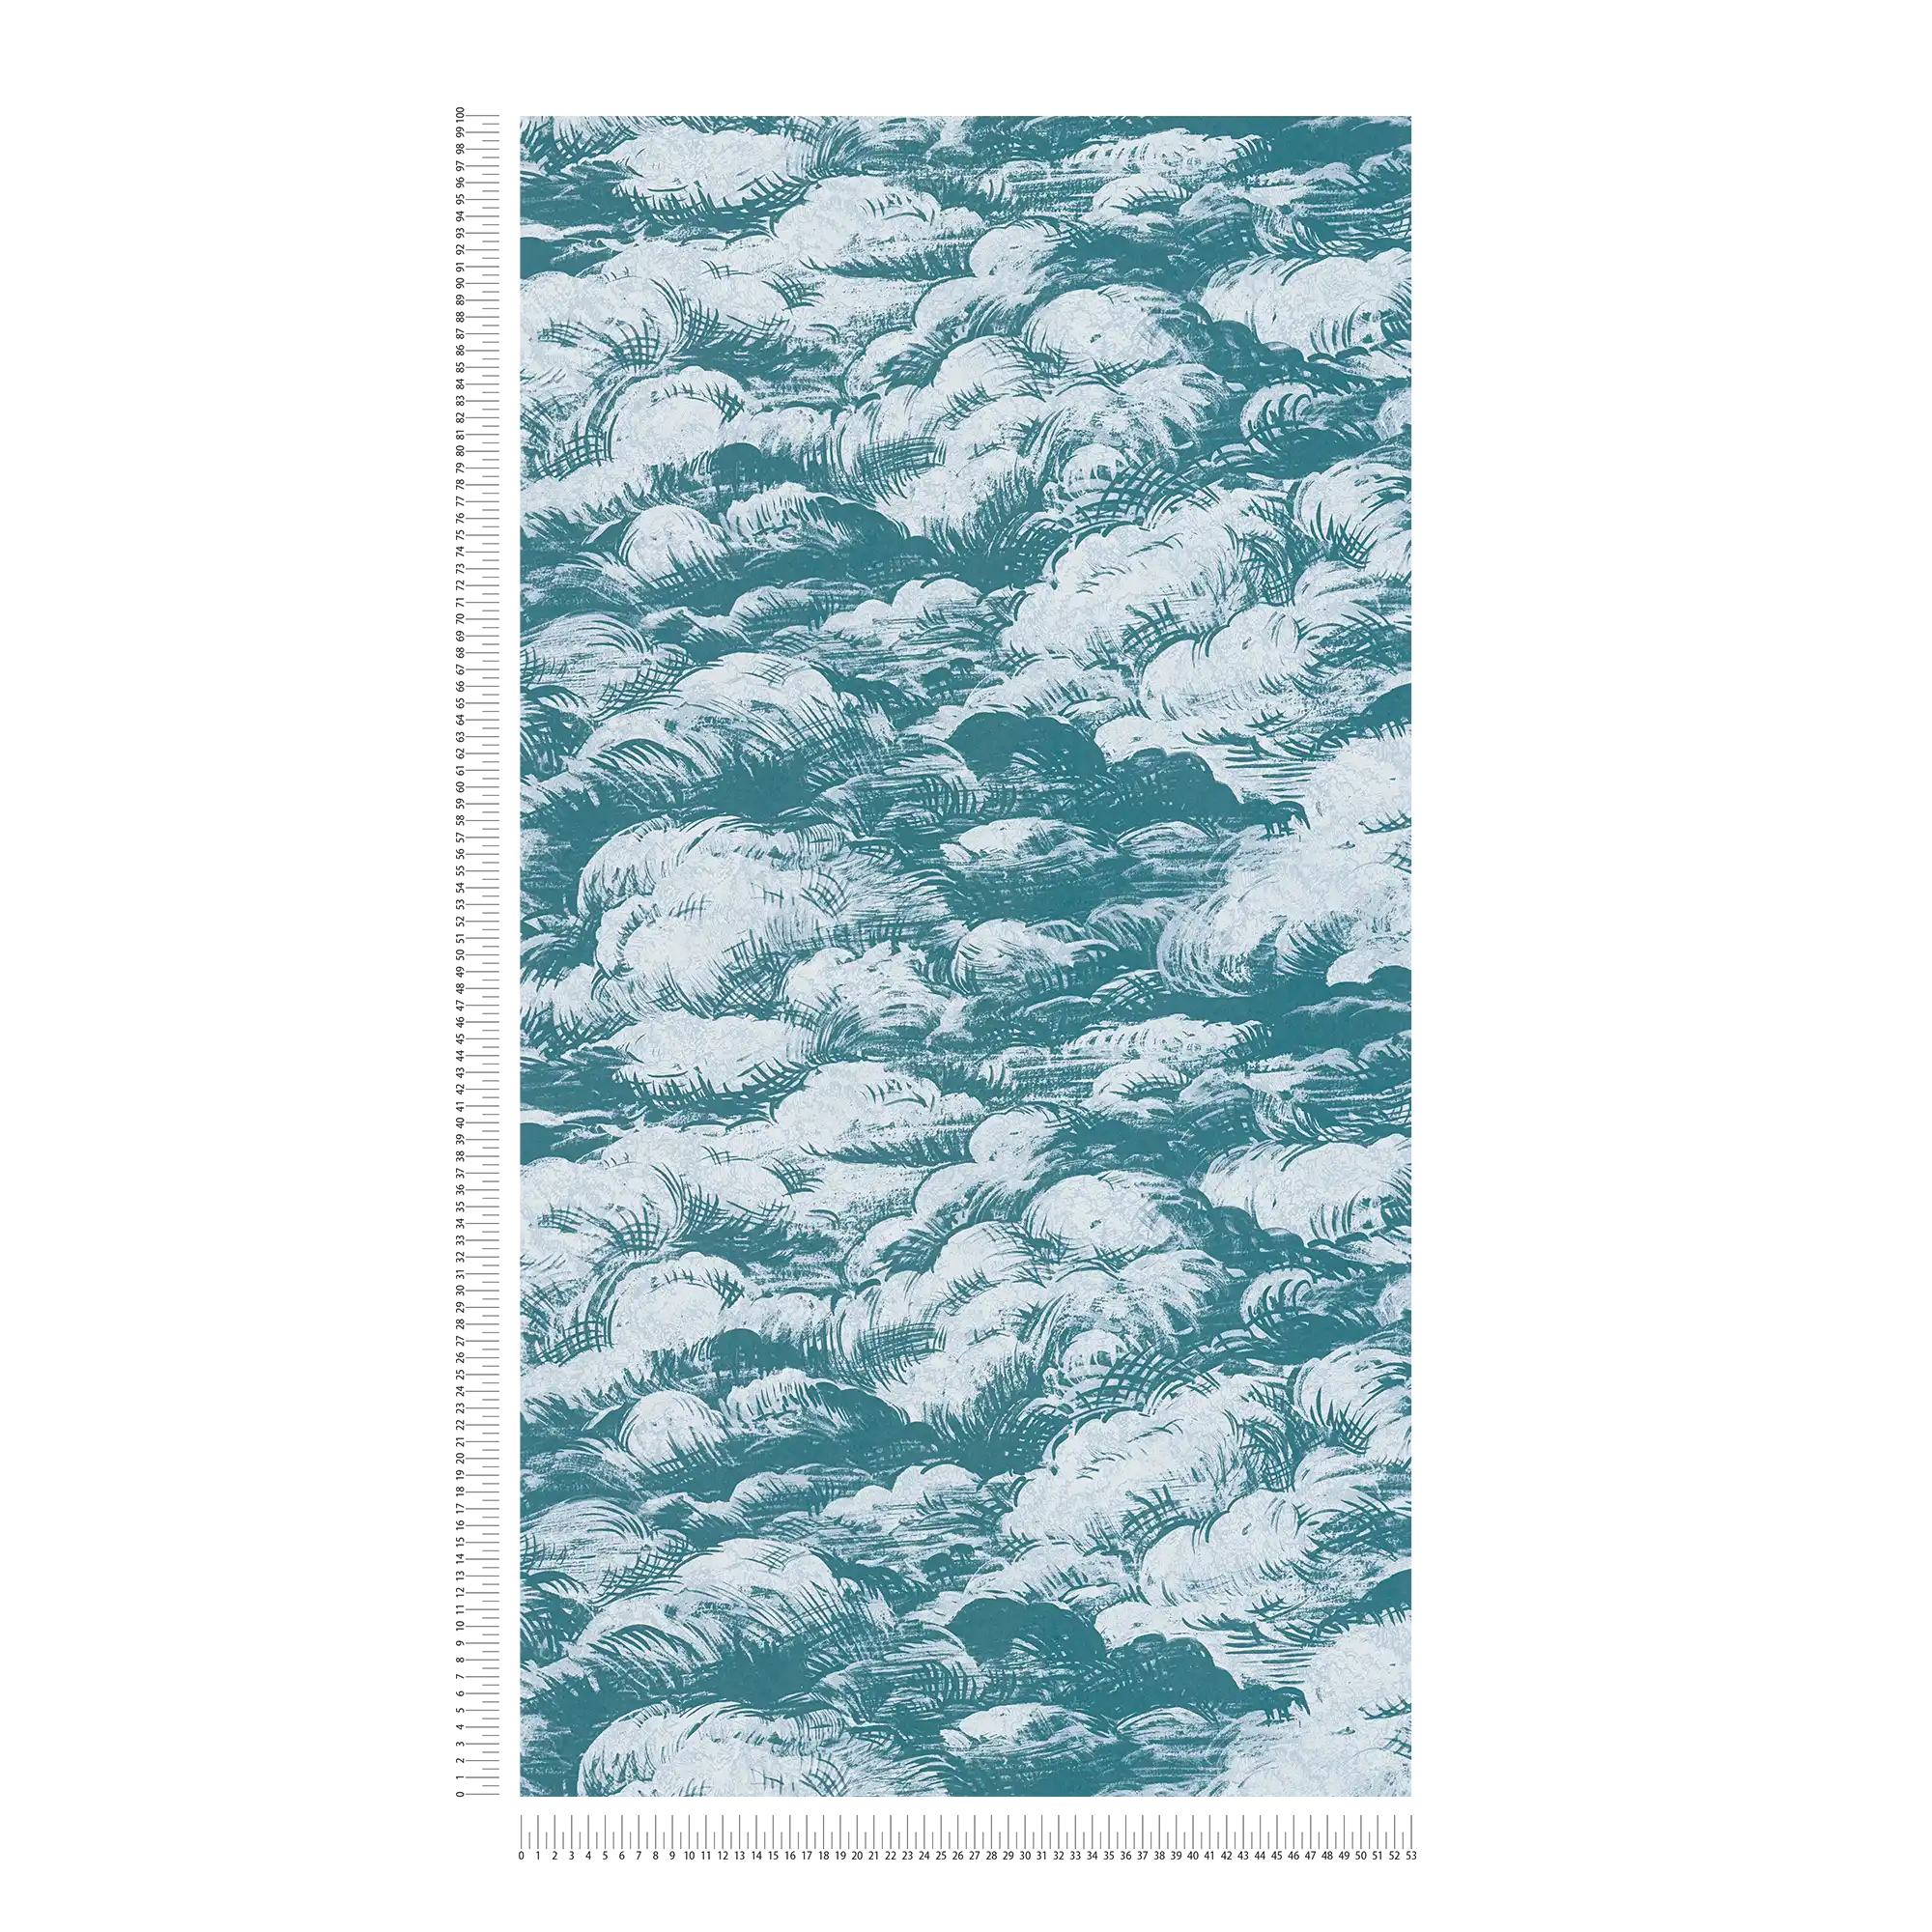             papel pintado azul verde nubes paisaje estilo vintage - azul, blanco
        